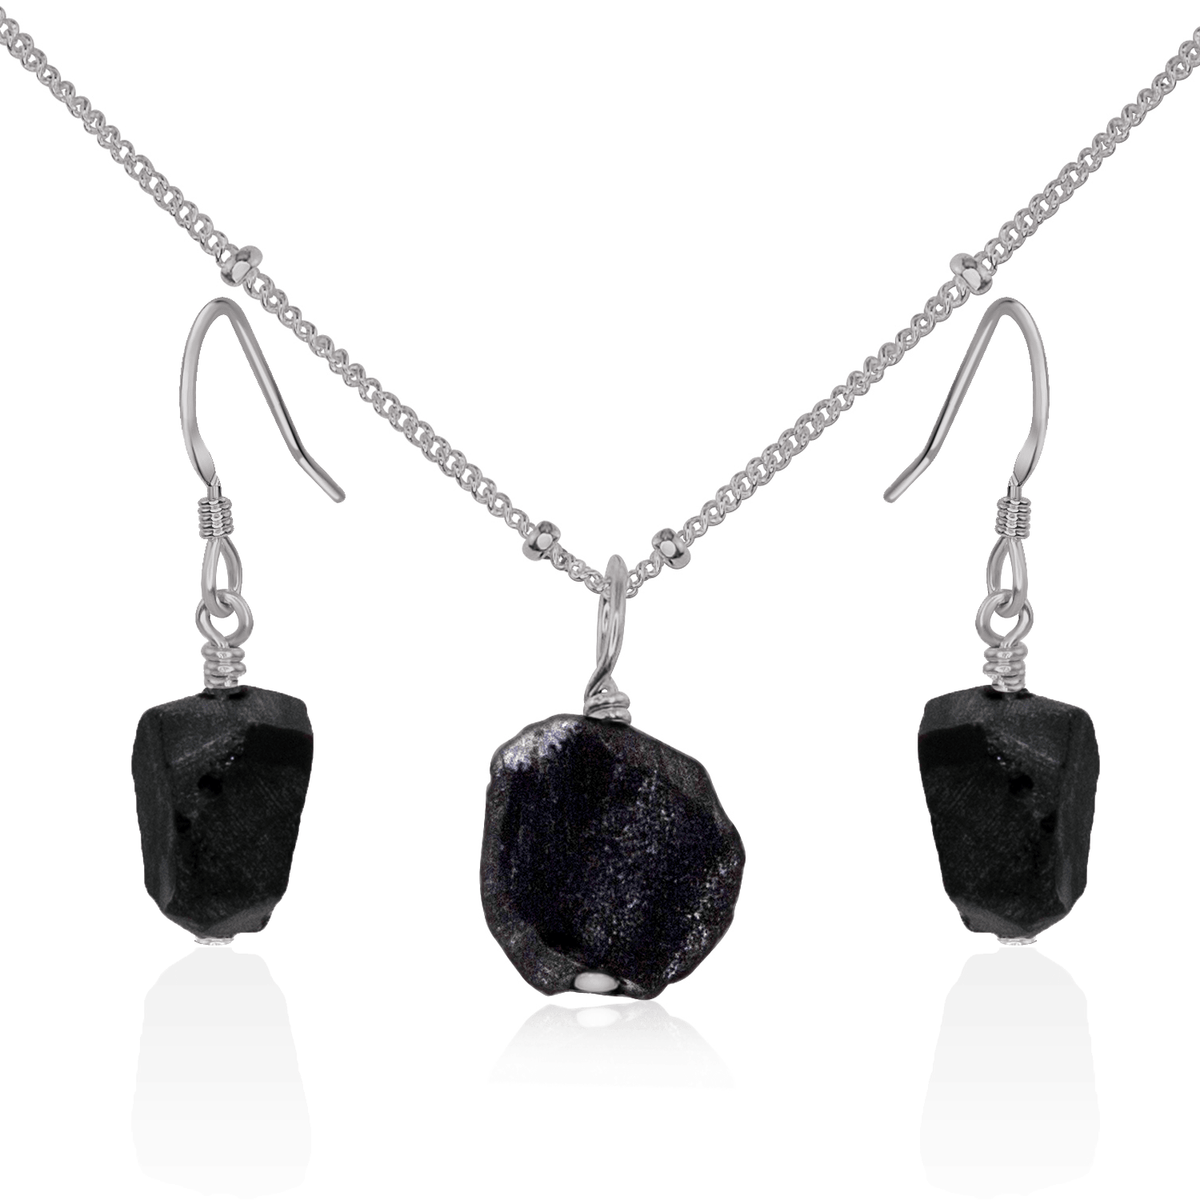 Raw Obsidian Crystal Earrings & Necklace Set - Raw Obsidian Crystal Earrings & Necklace Set - Stainless Steel / Satellite - Luna Tide Handmade Crystal Jewellery